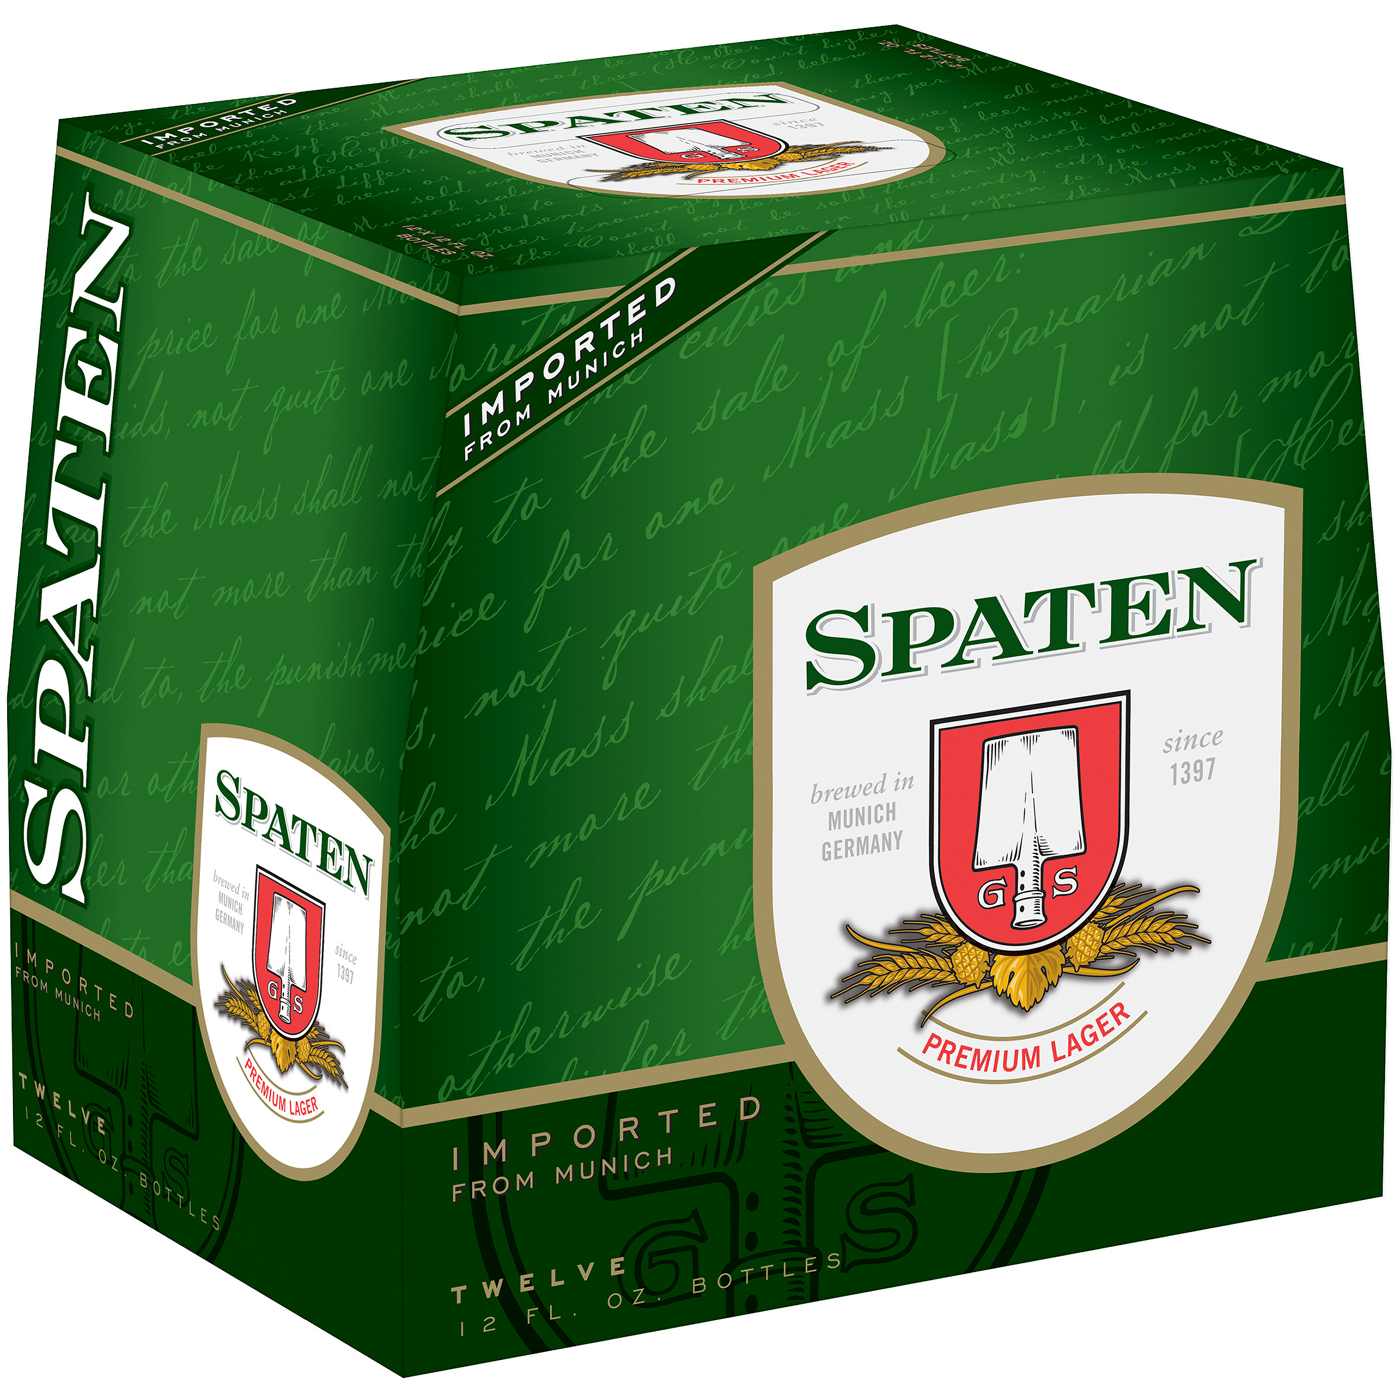 Spaten Premium Lager Beer 12 pk Bottles; image 1 of 2